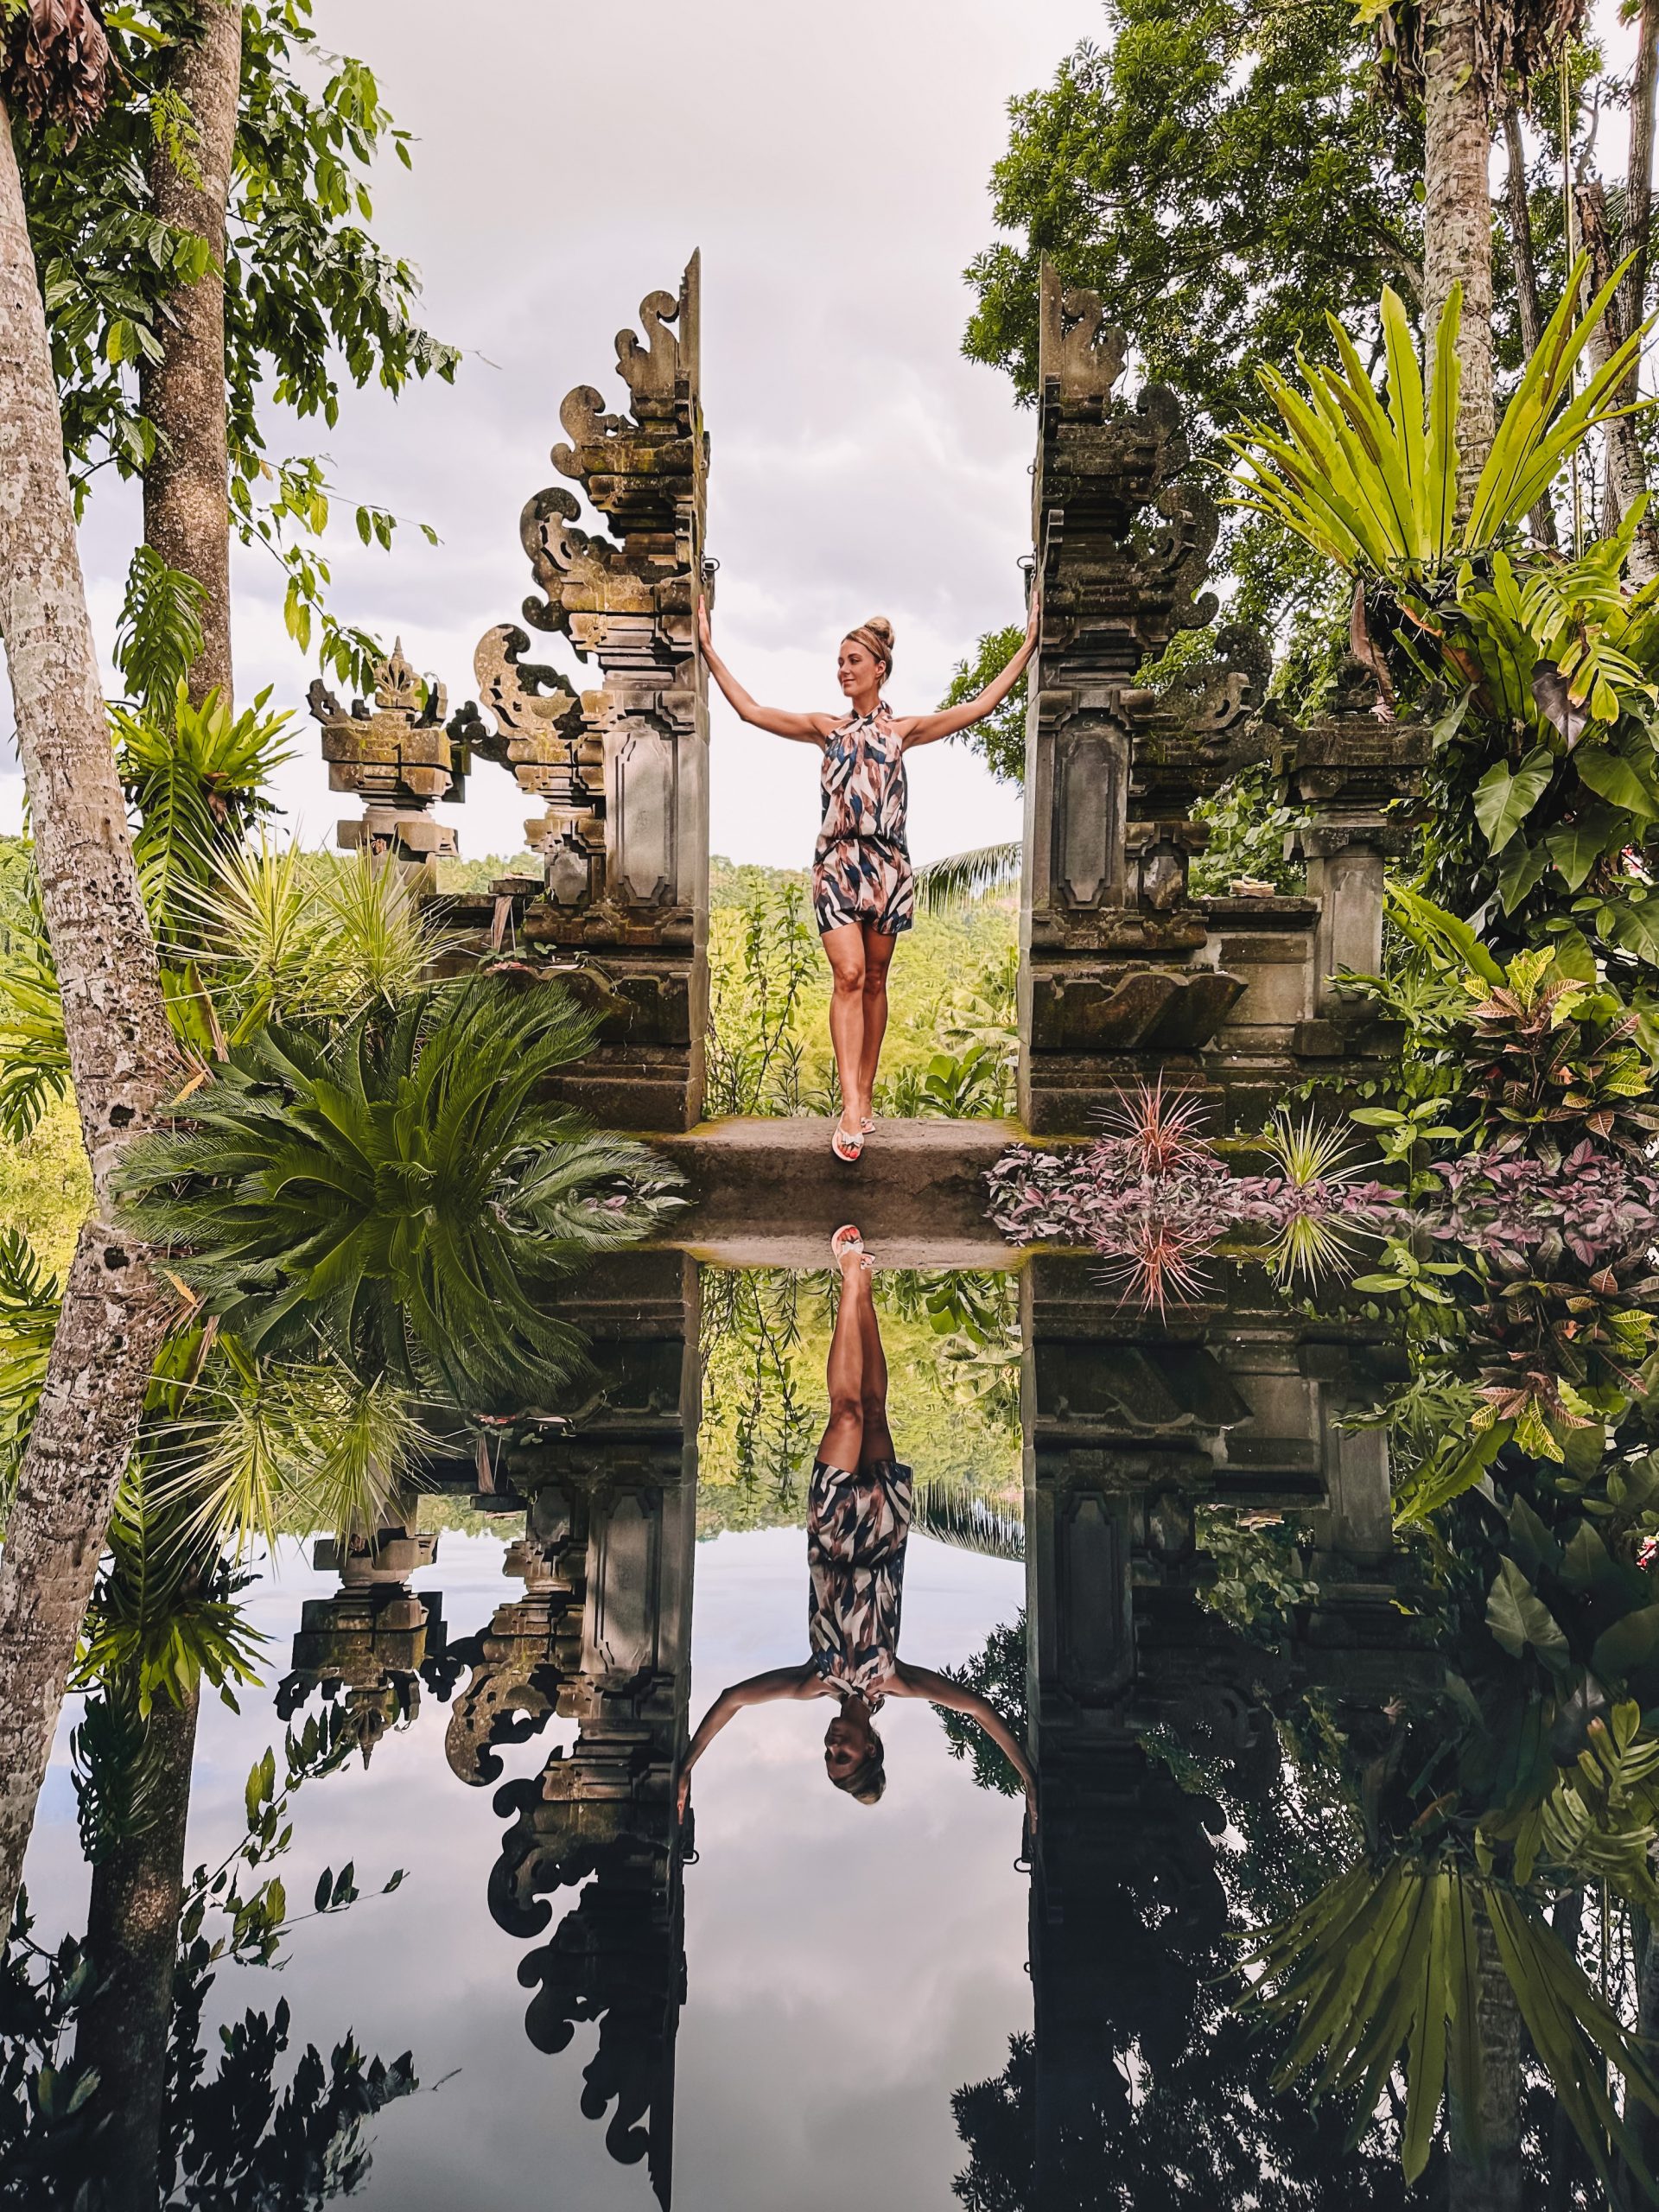 Bali Jungle Swings - Bali, Indonesia